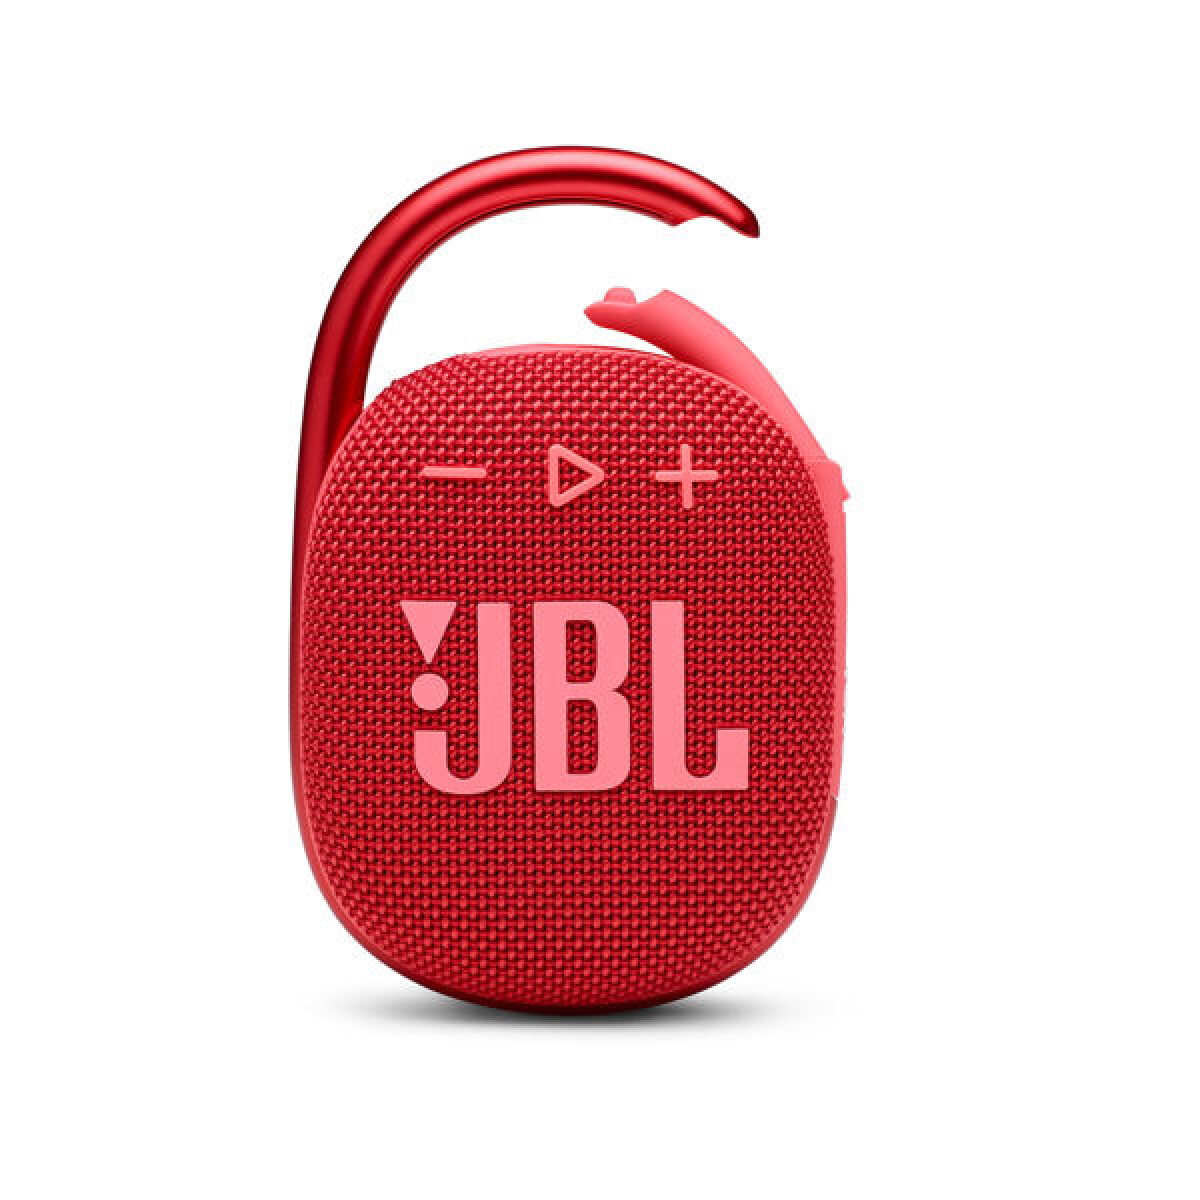 Jbl clip 4 parlante portátil waterproof - Rojo 